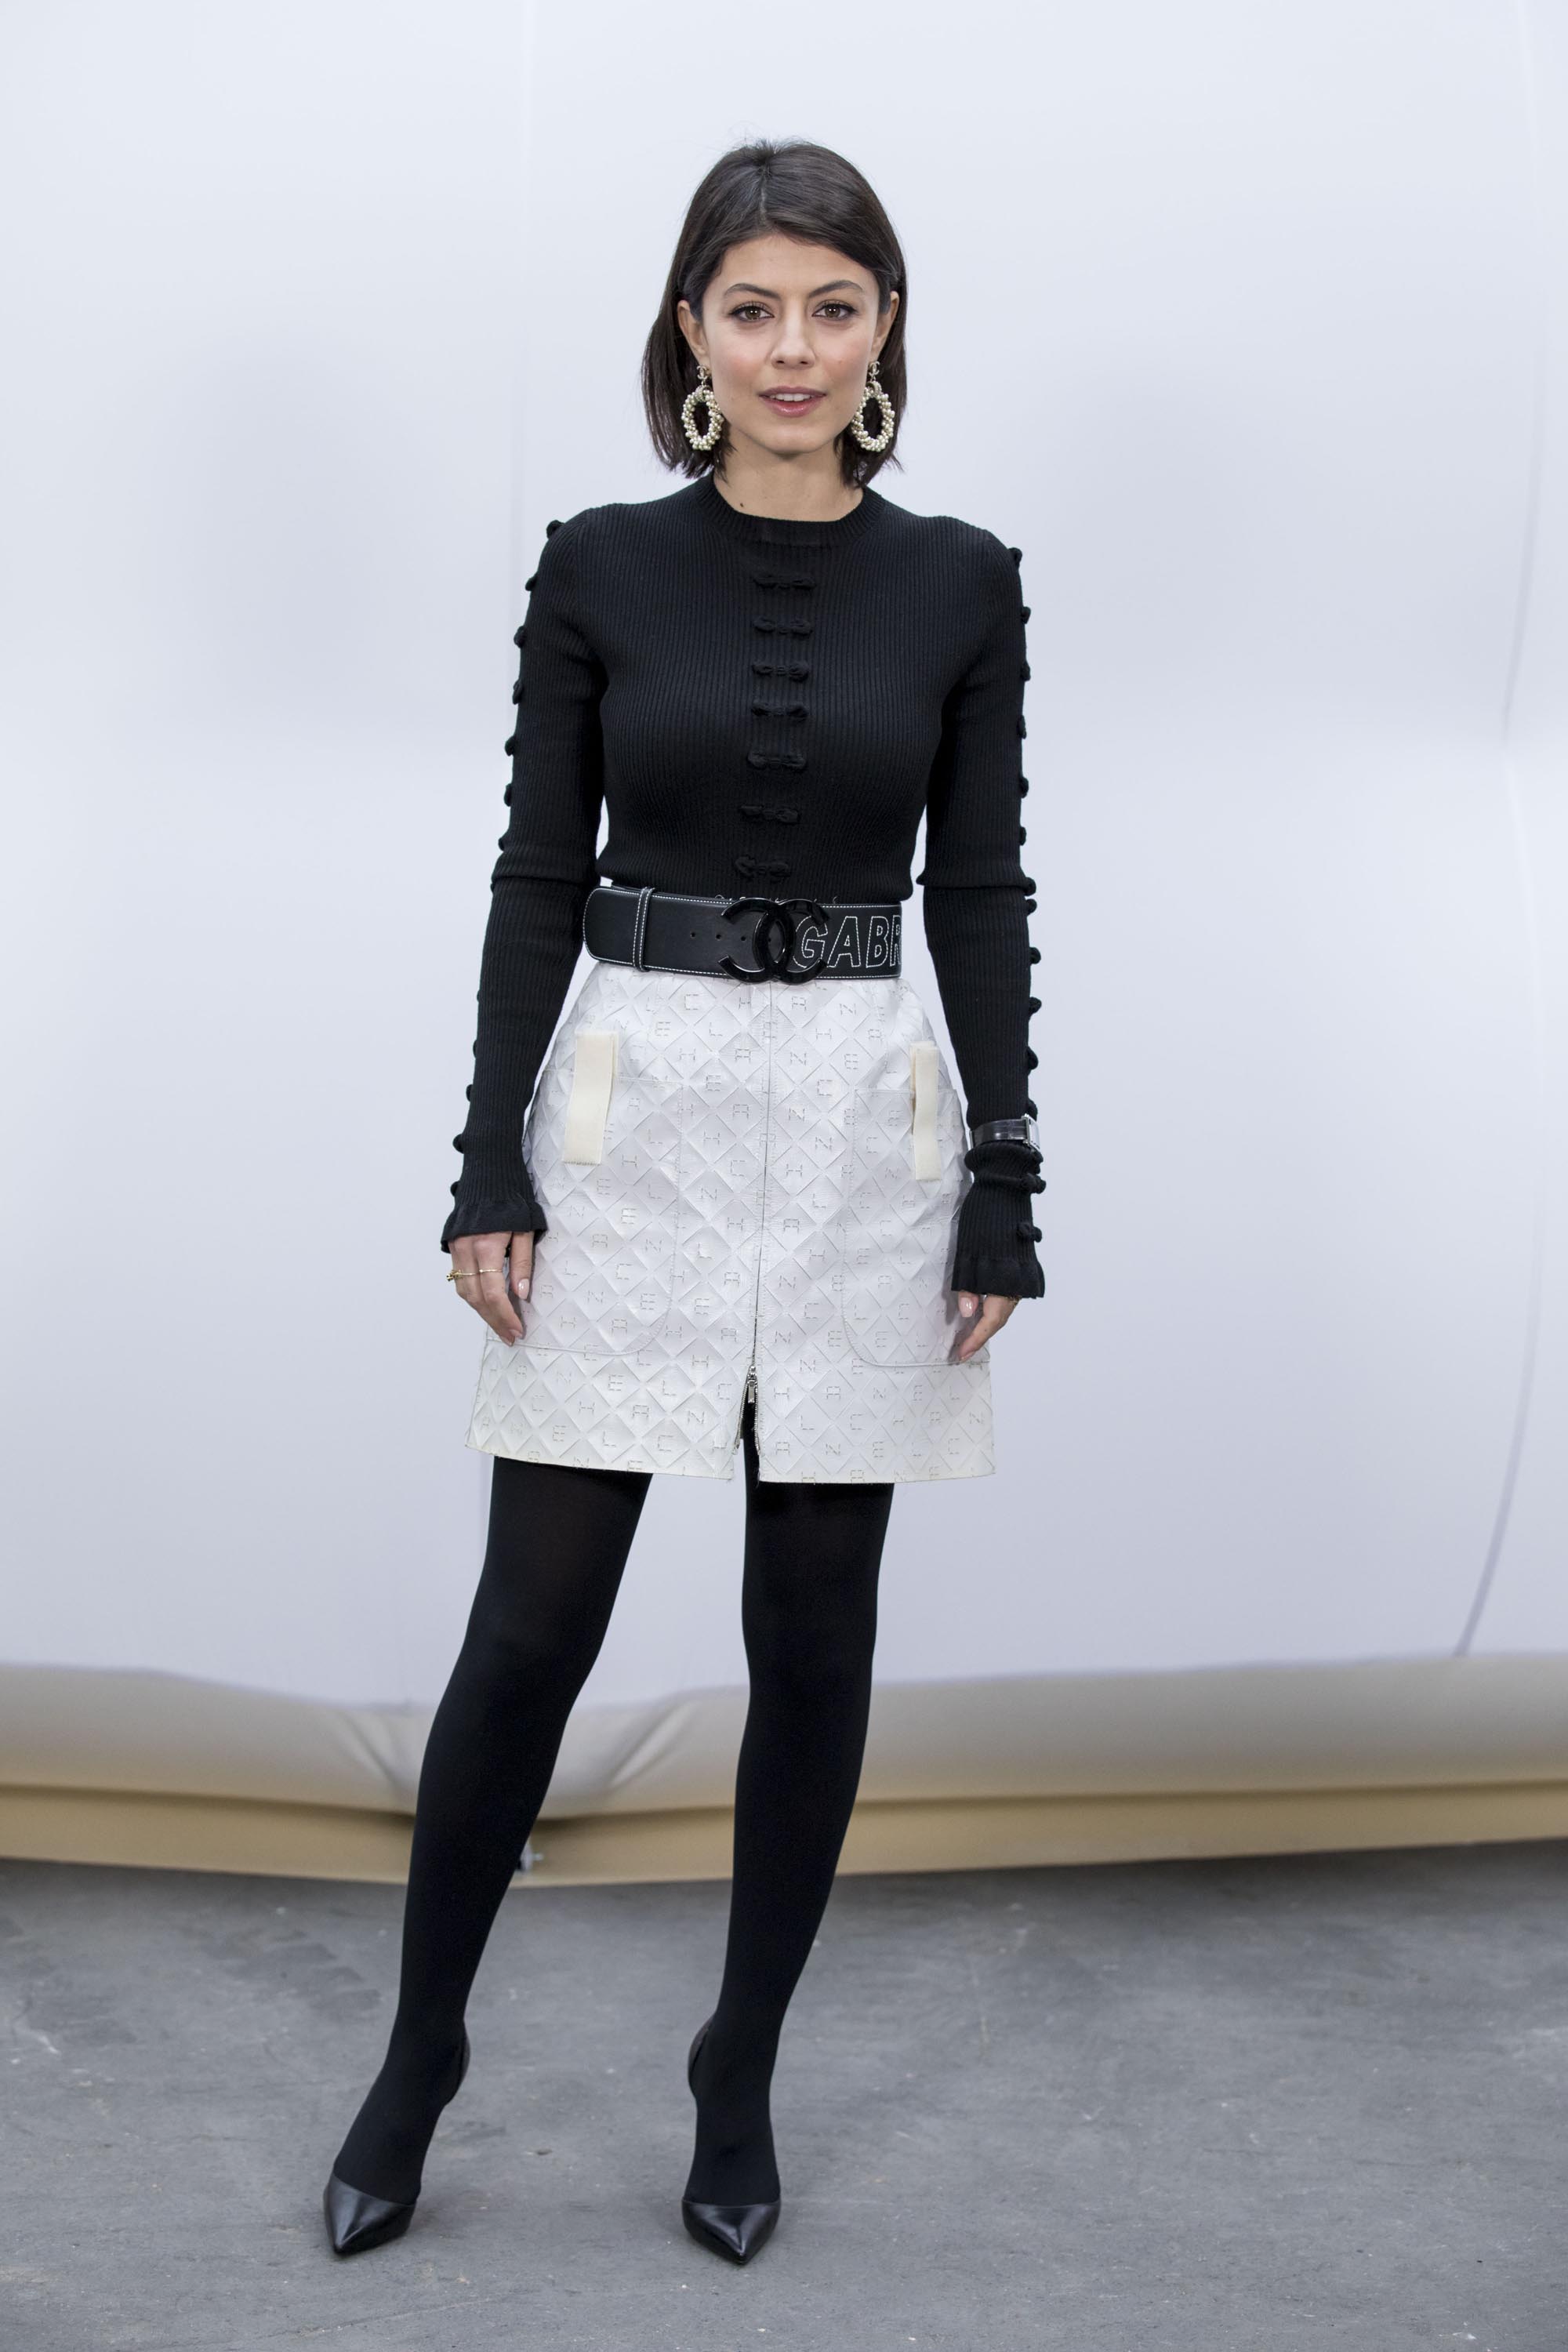 Alessandra Mastronardi attends Chanel show